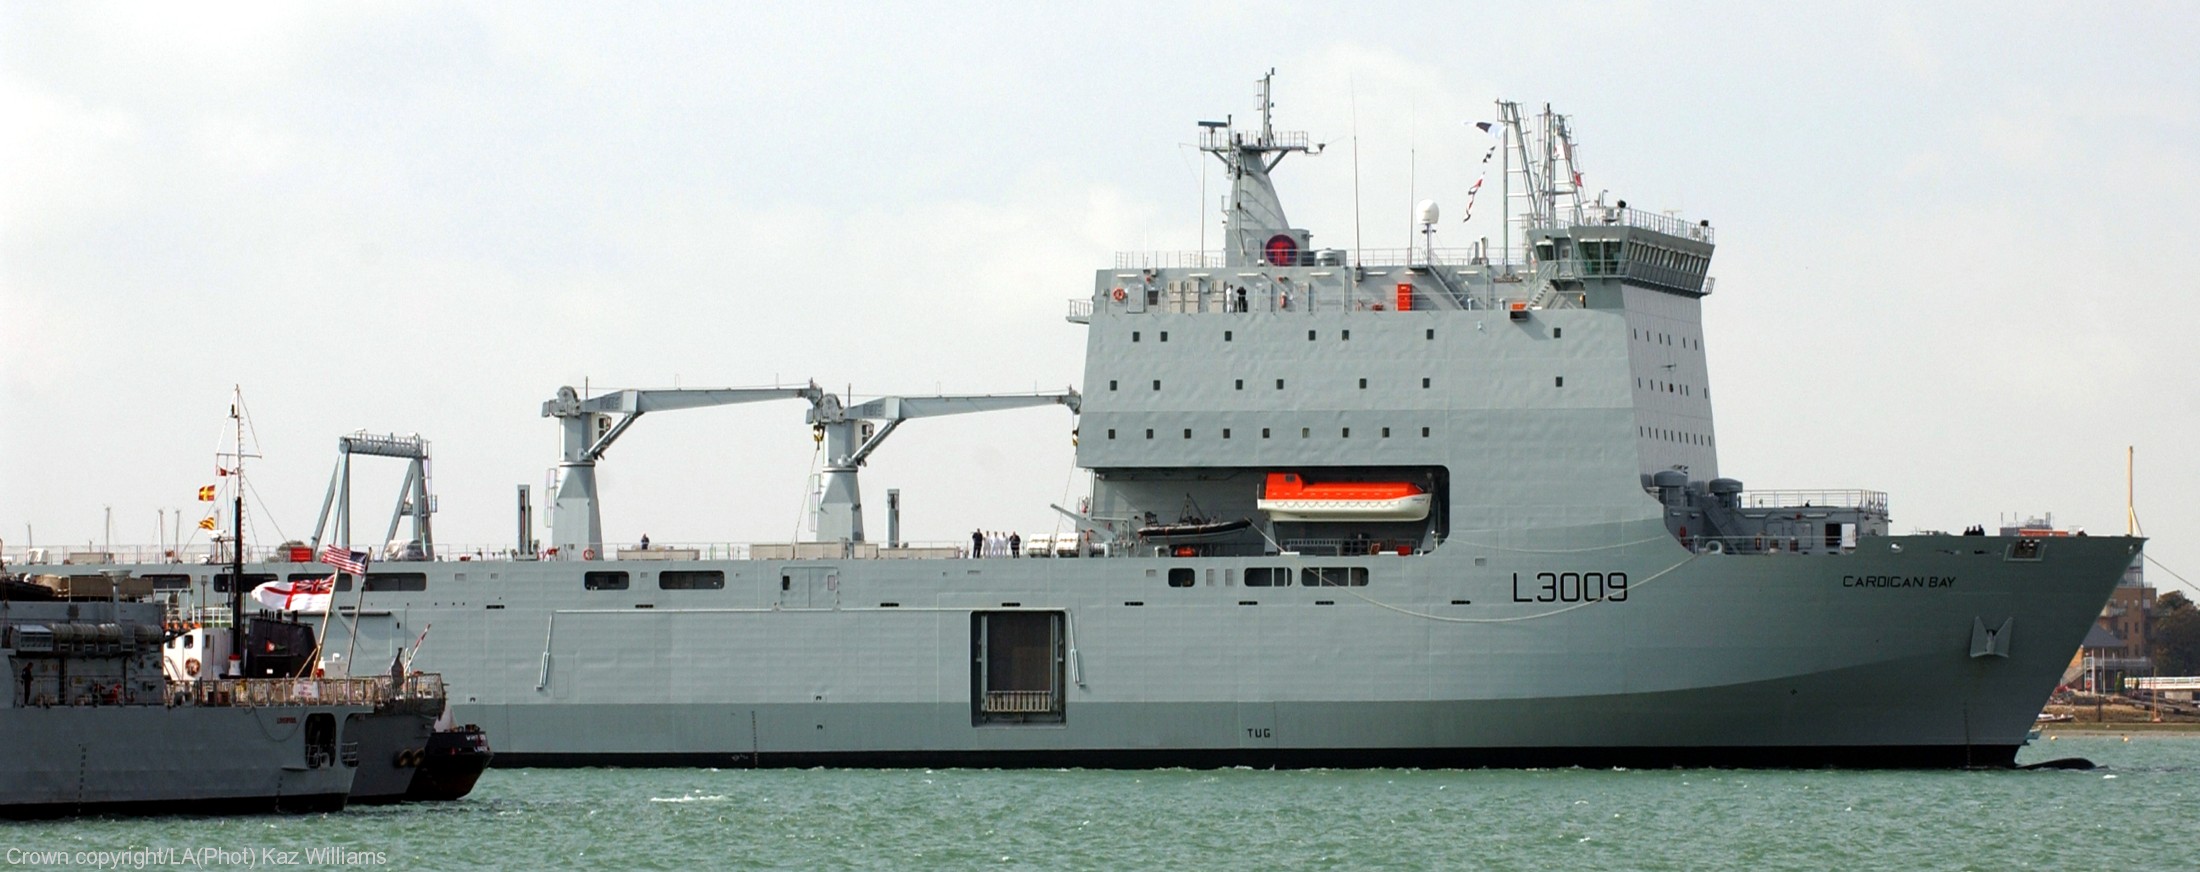 l-3009 rfa cardigan bay class dock landing ship lsd royal navy fleet auxilary 07